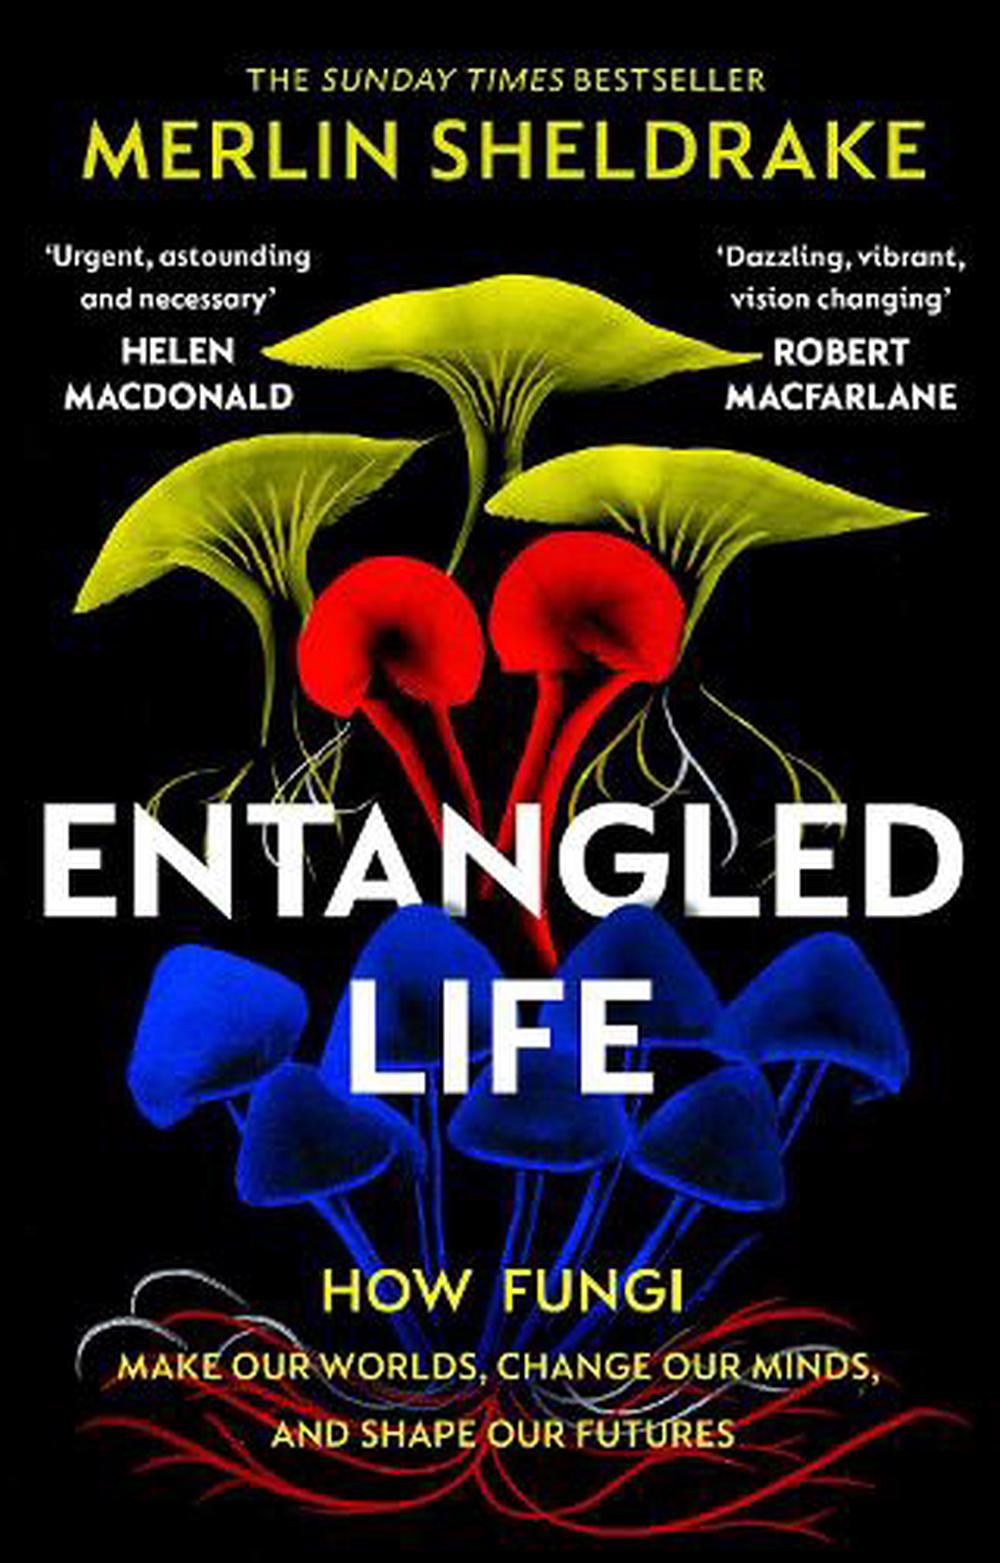 book entangled life